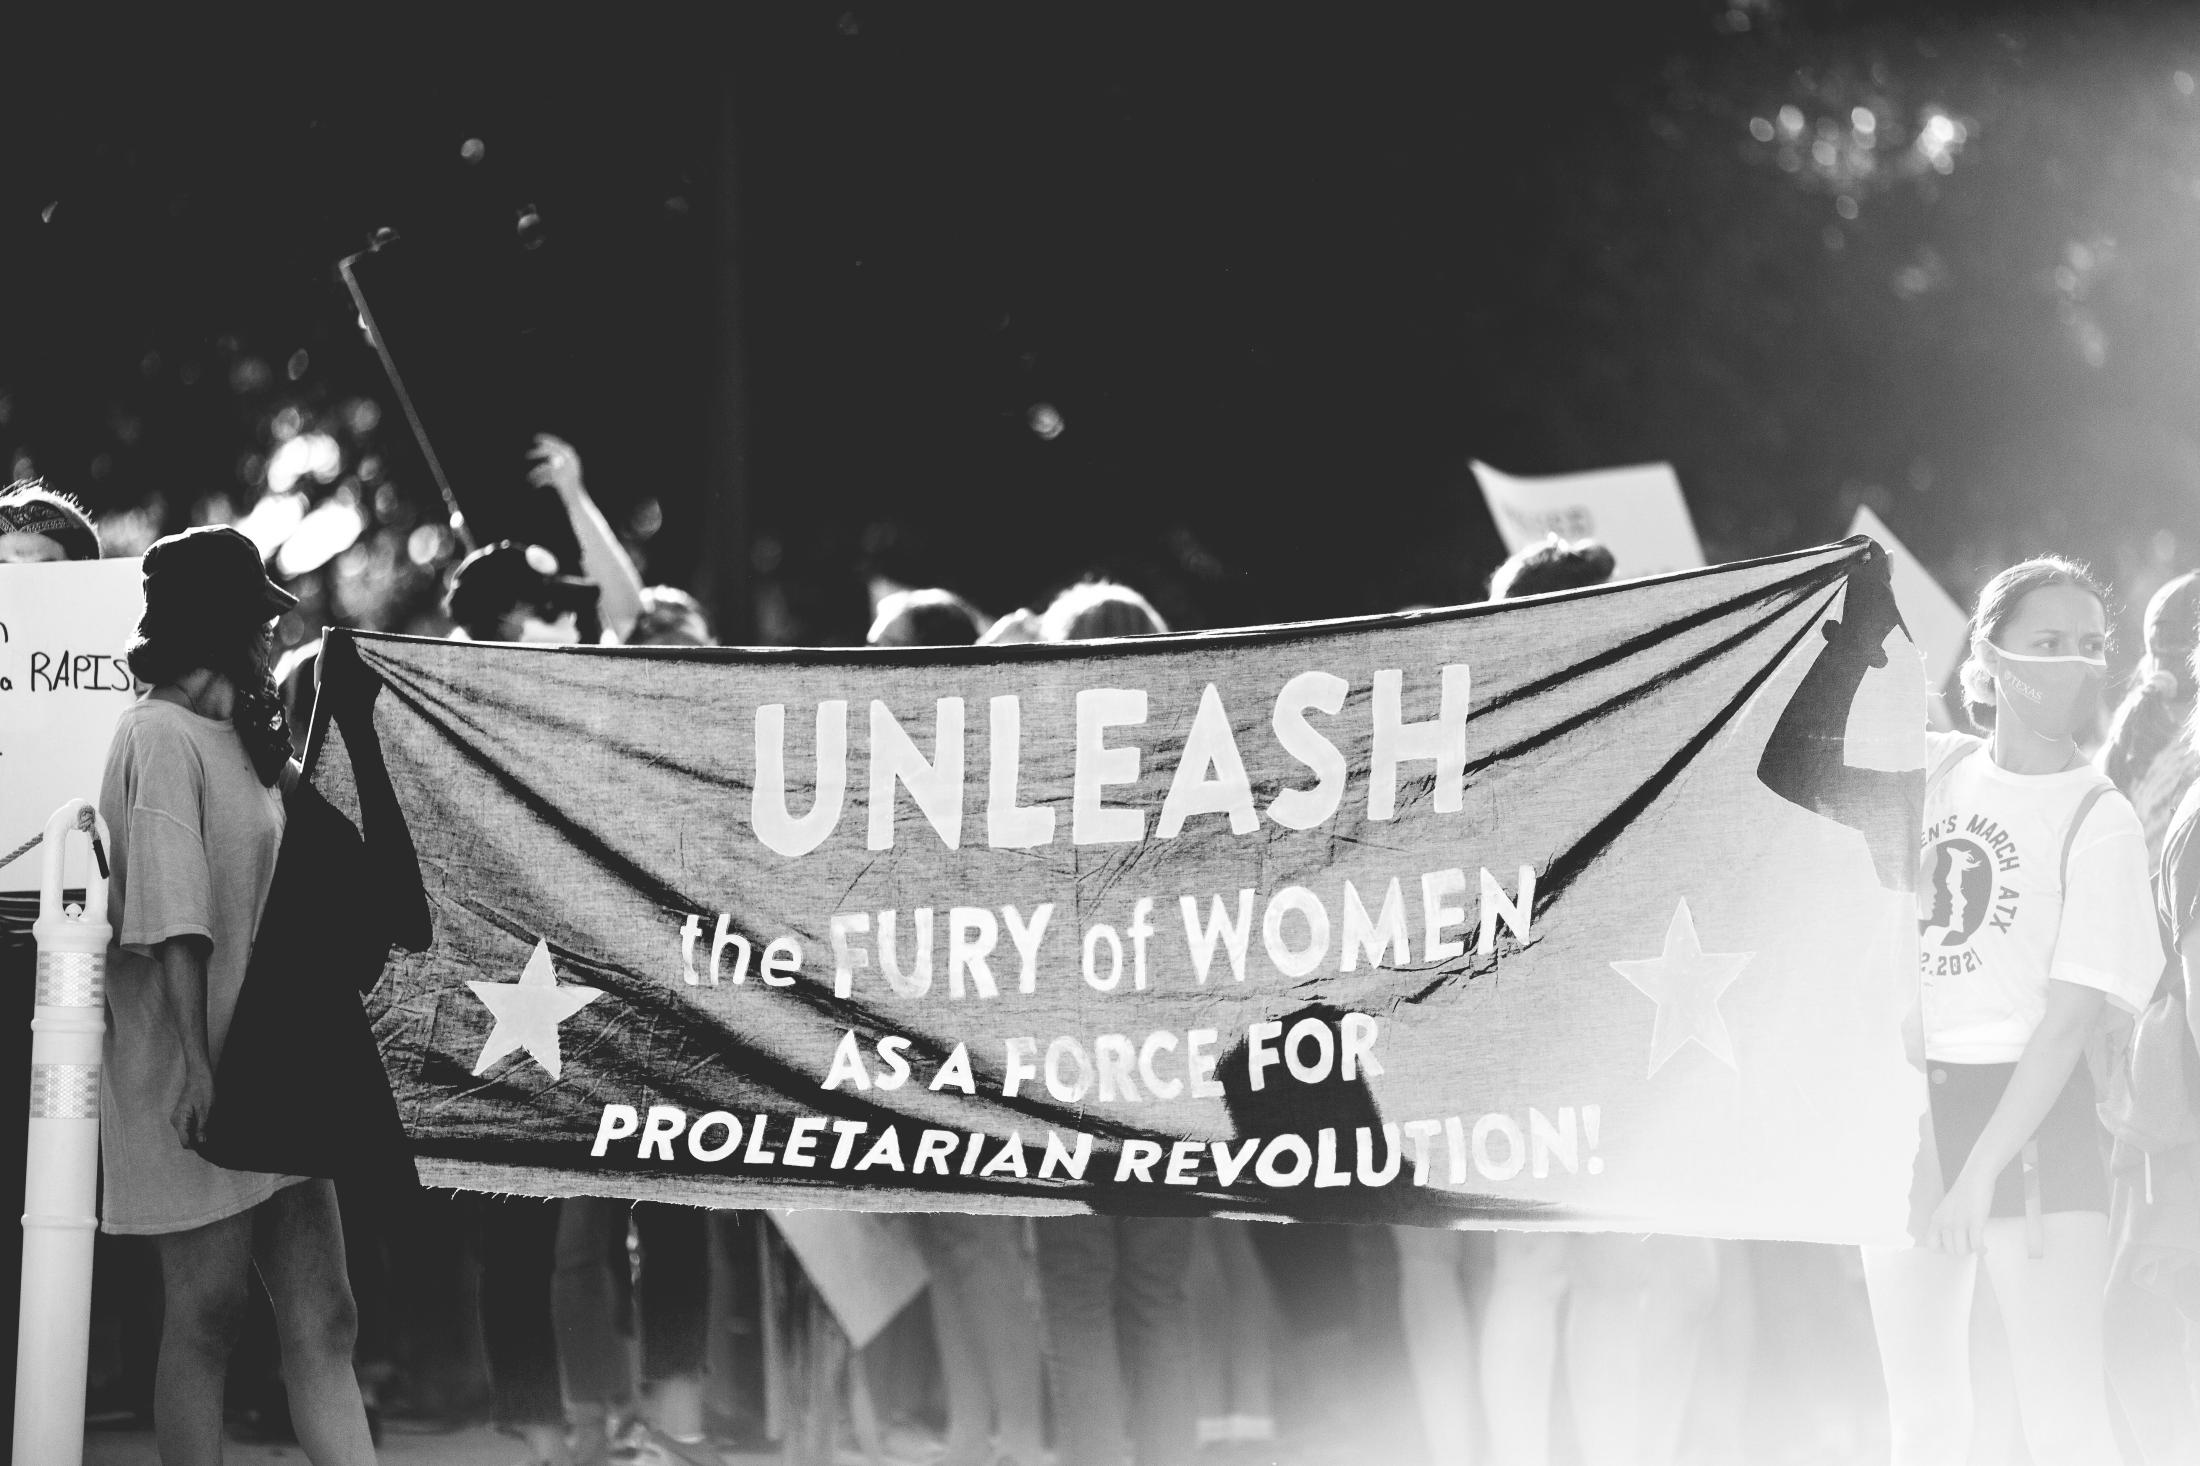 2021 Women's March, ATX - 